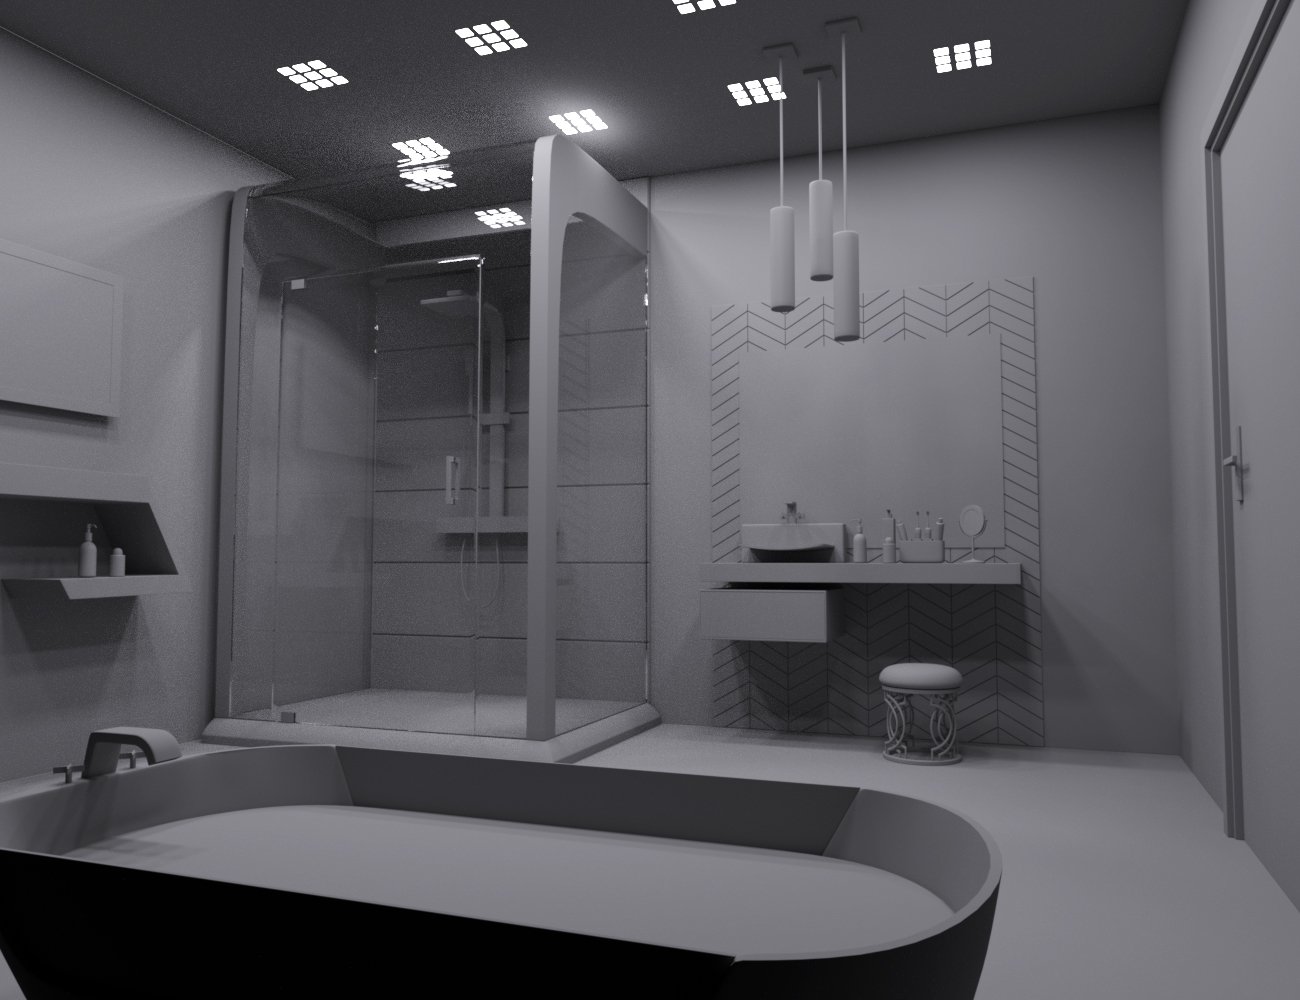 Futuristic Bathroom by: Charlie, 3D Models by Daz 3D